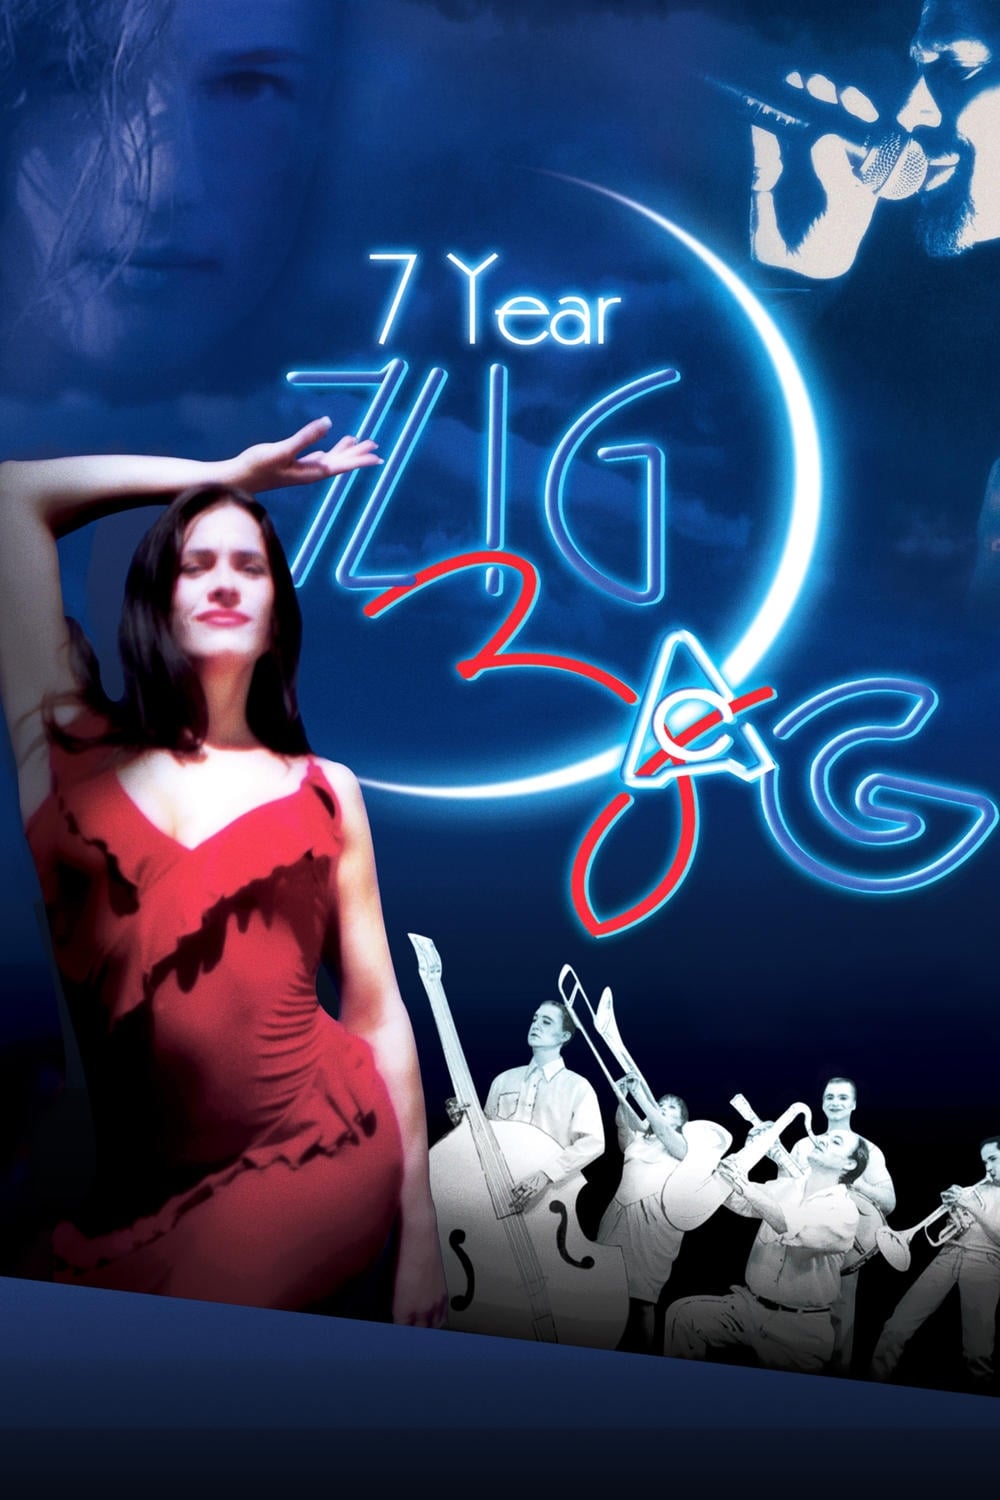 7 Year Zig Zag (2003) постер